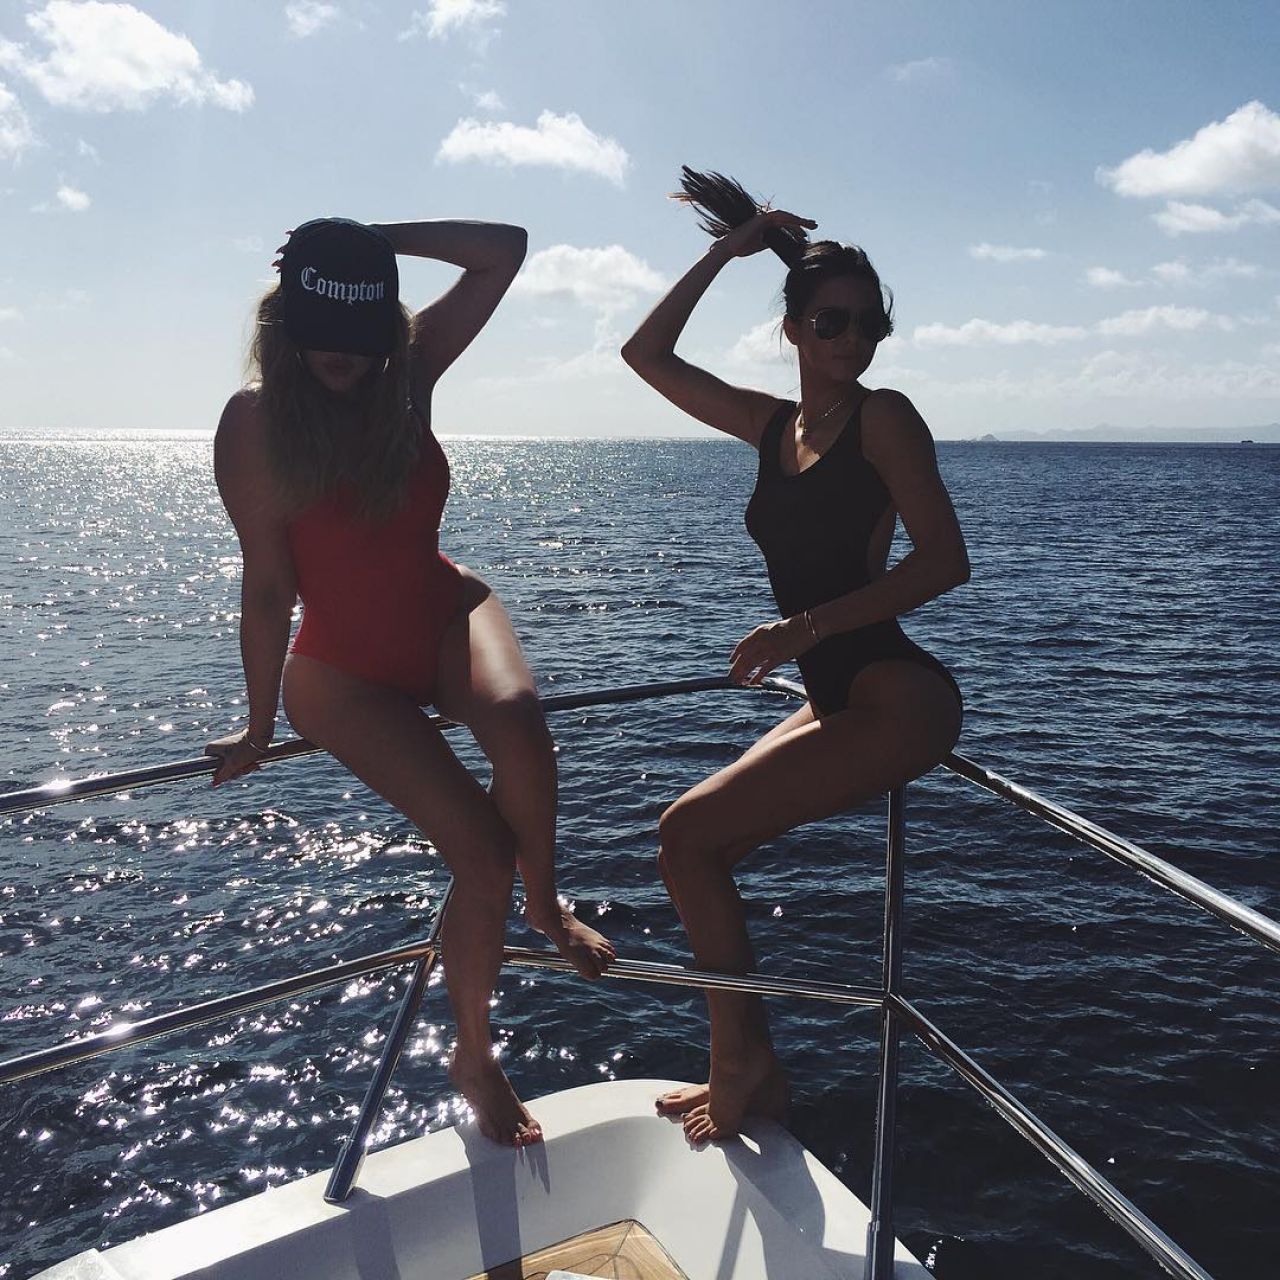 kendall-jenner-khloe-kardashian-on-a-boat-instagram-pics-august-2015_3